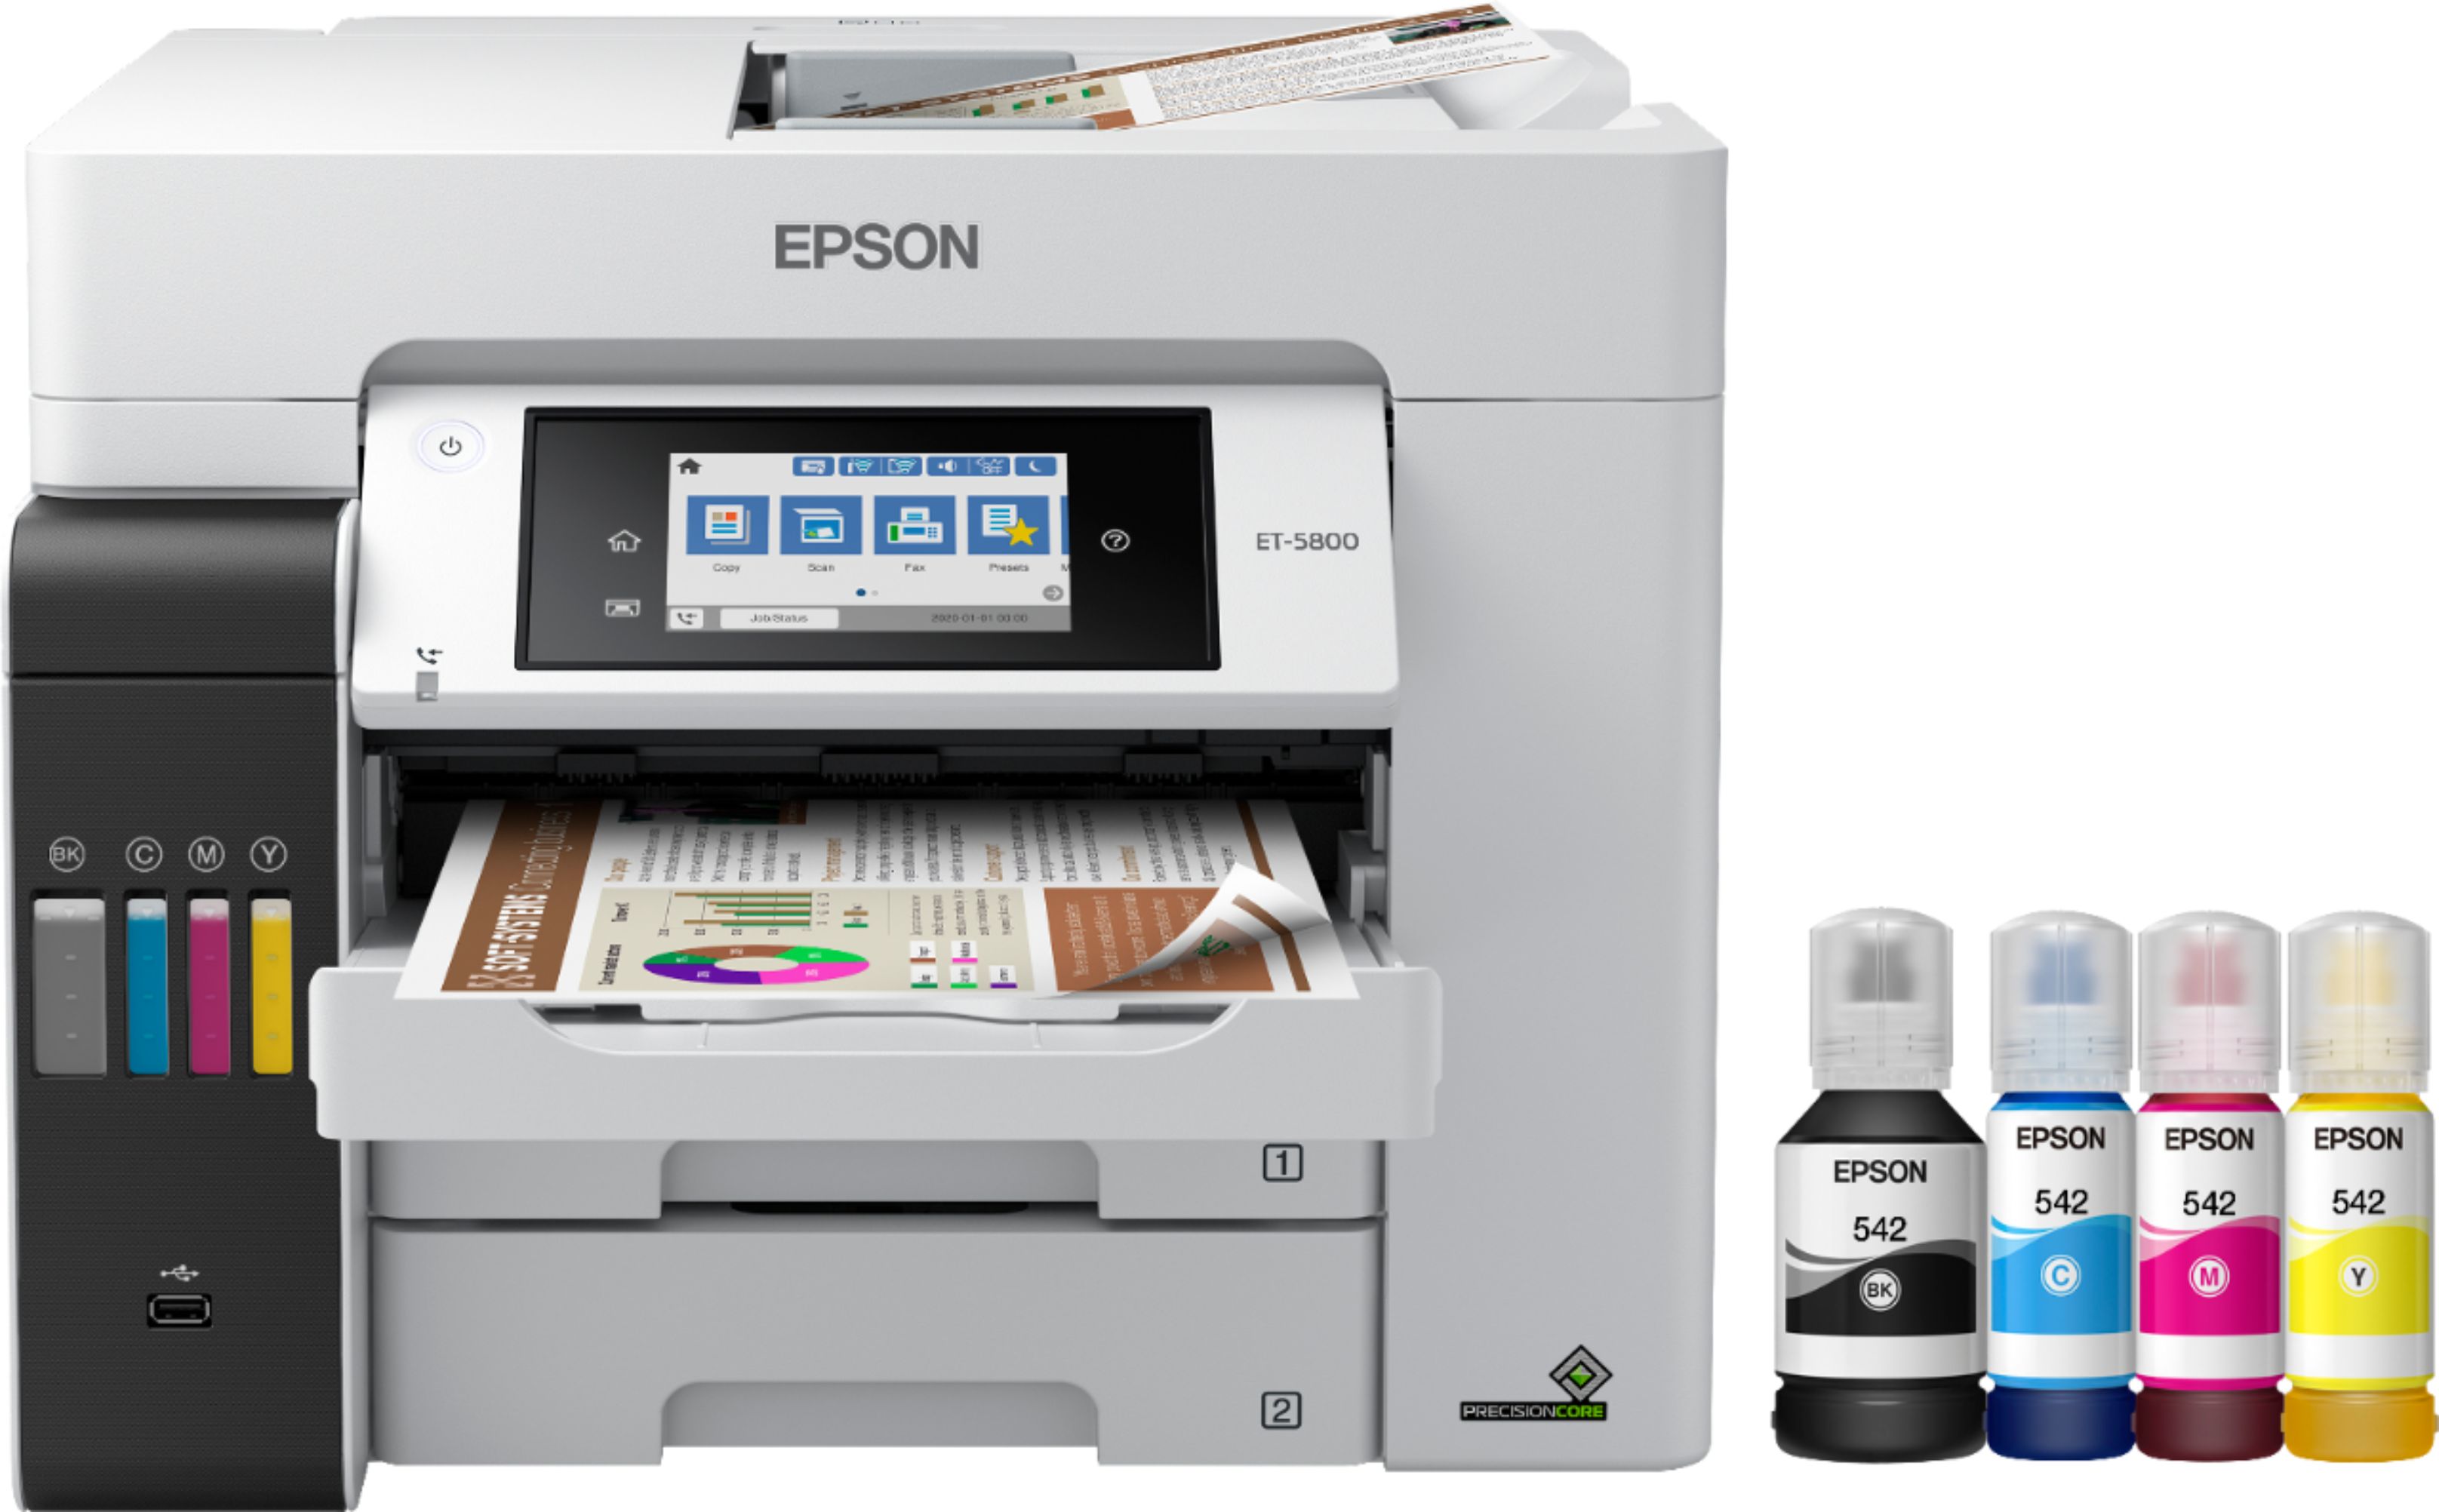 Epson EcoTank ET-3850 Wireless Multifunction Printer - White for sale  online